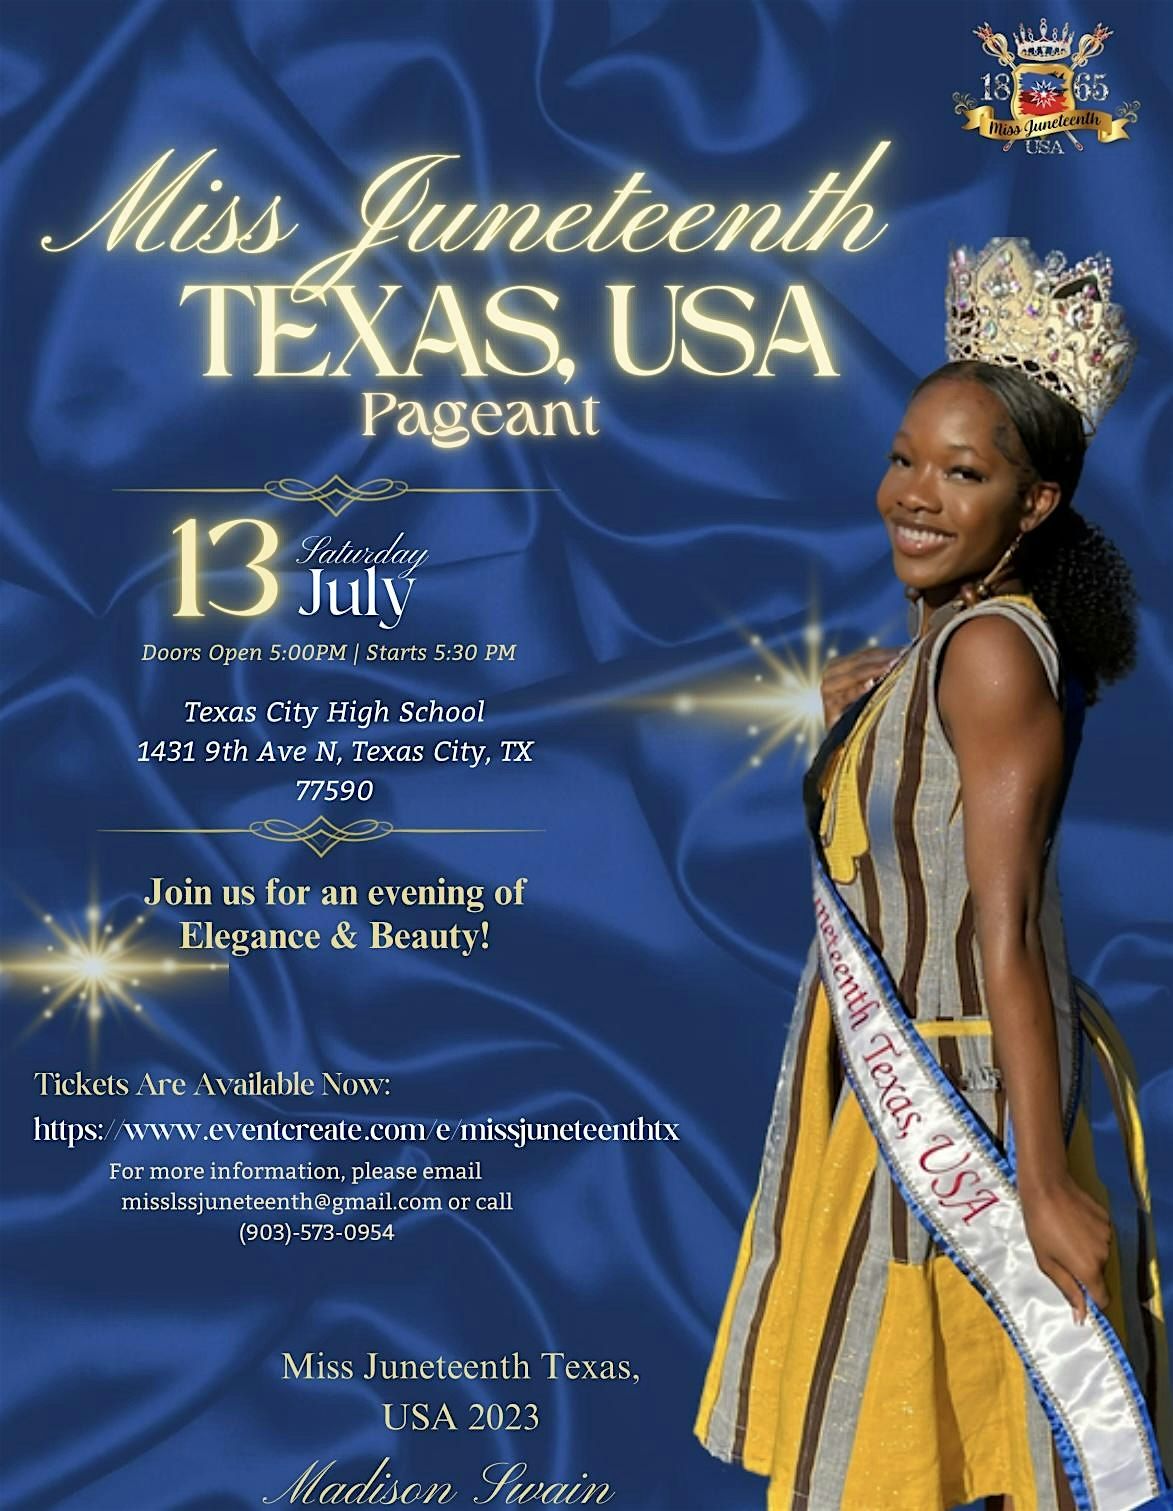 Miss Juneteenth Texas, USA Pageant